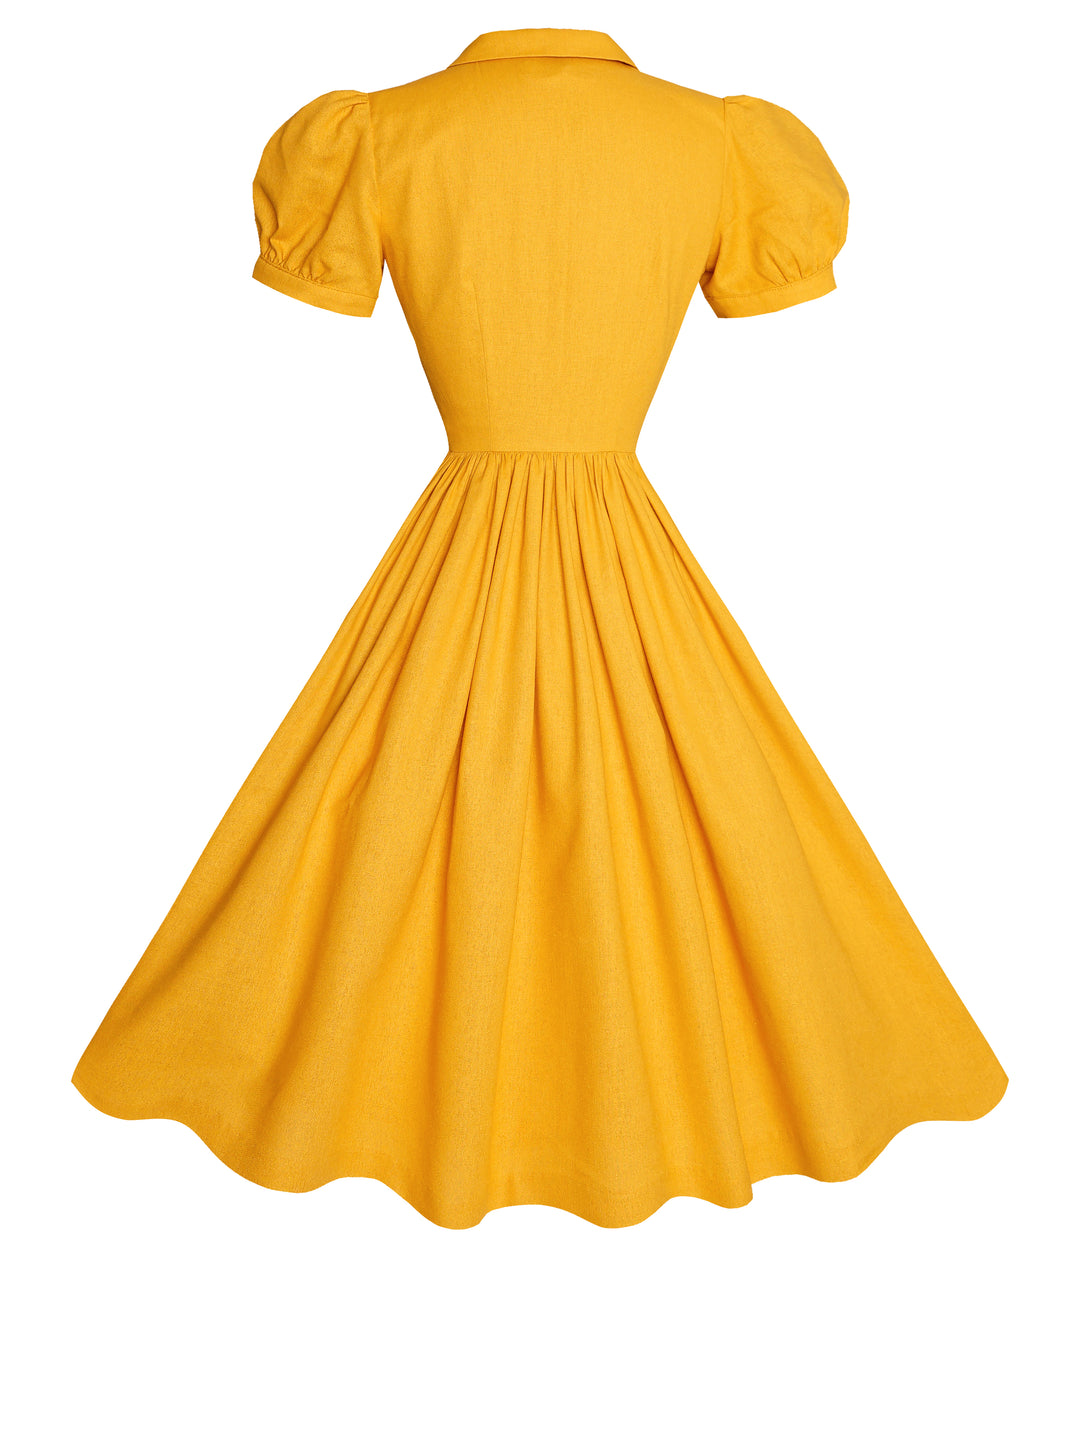 MTO - Judy Dress in Tuscany Yellow Linen